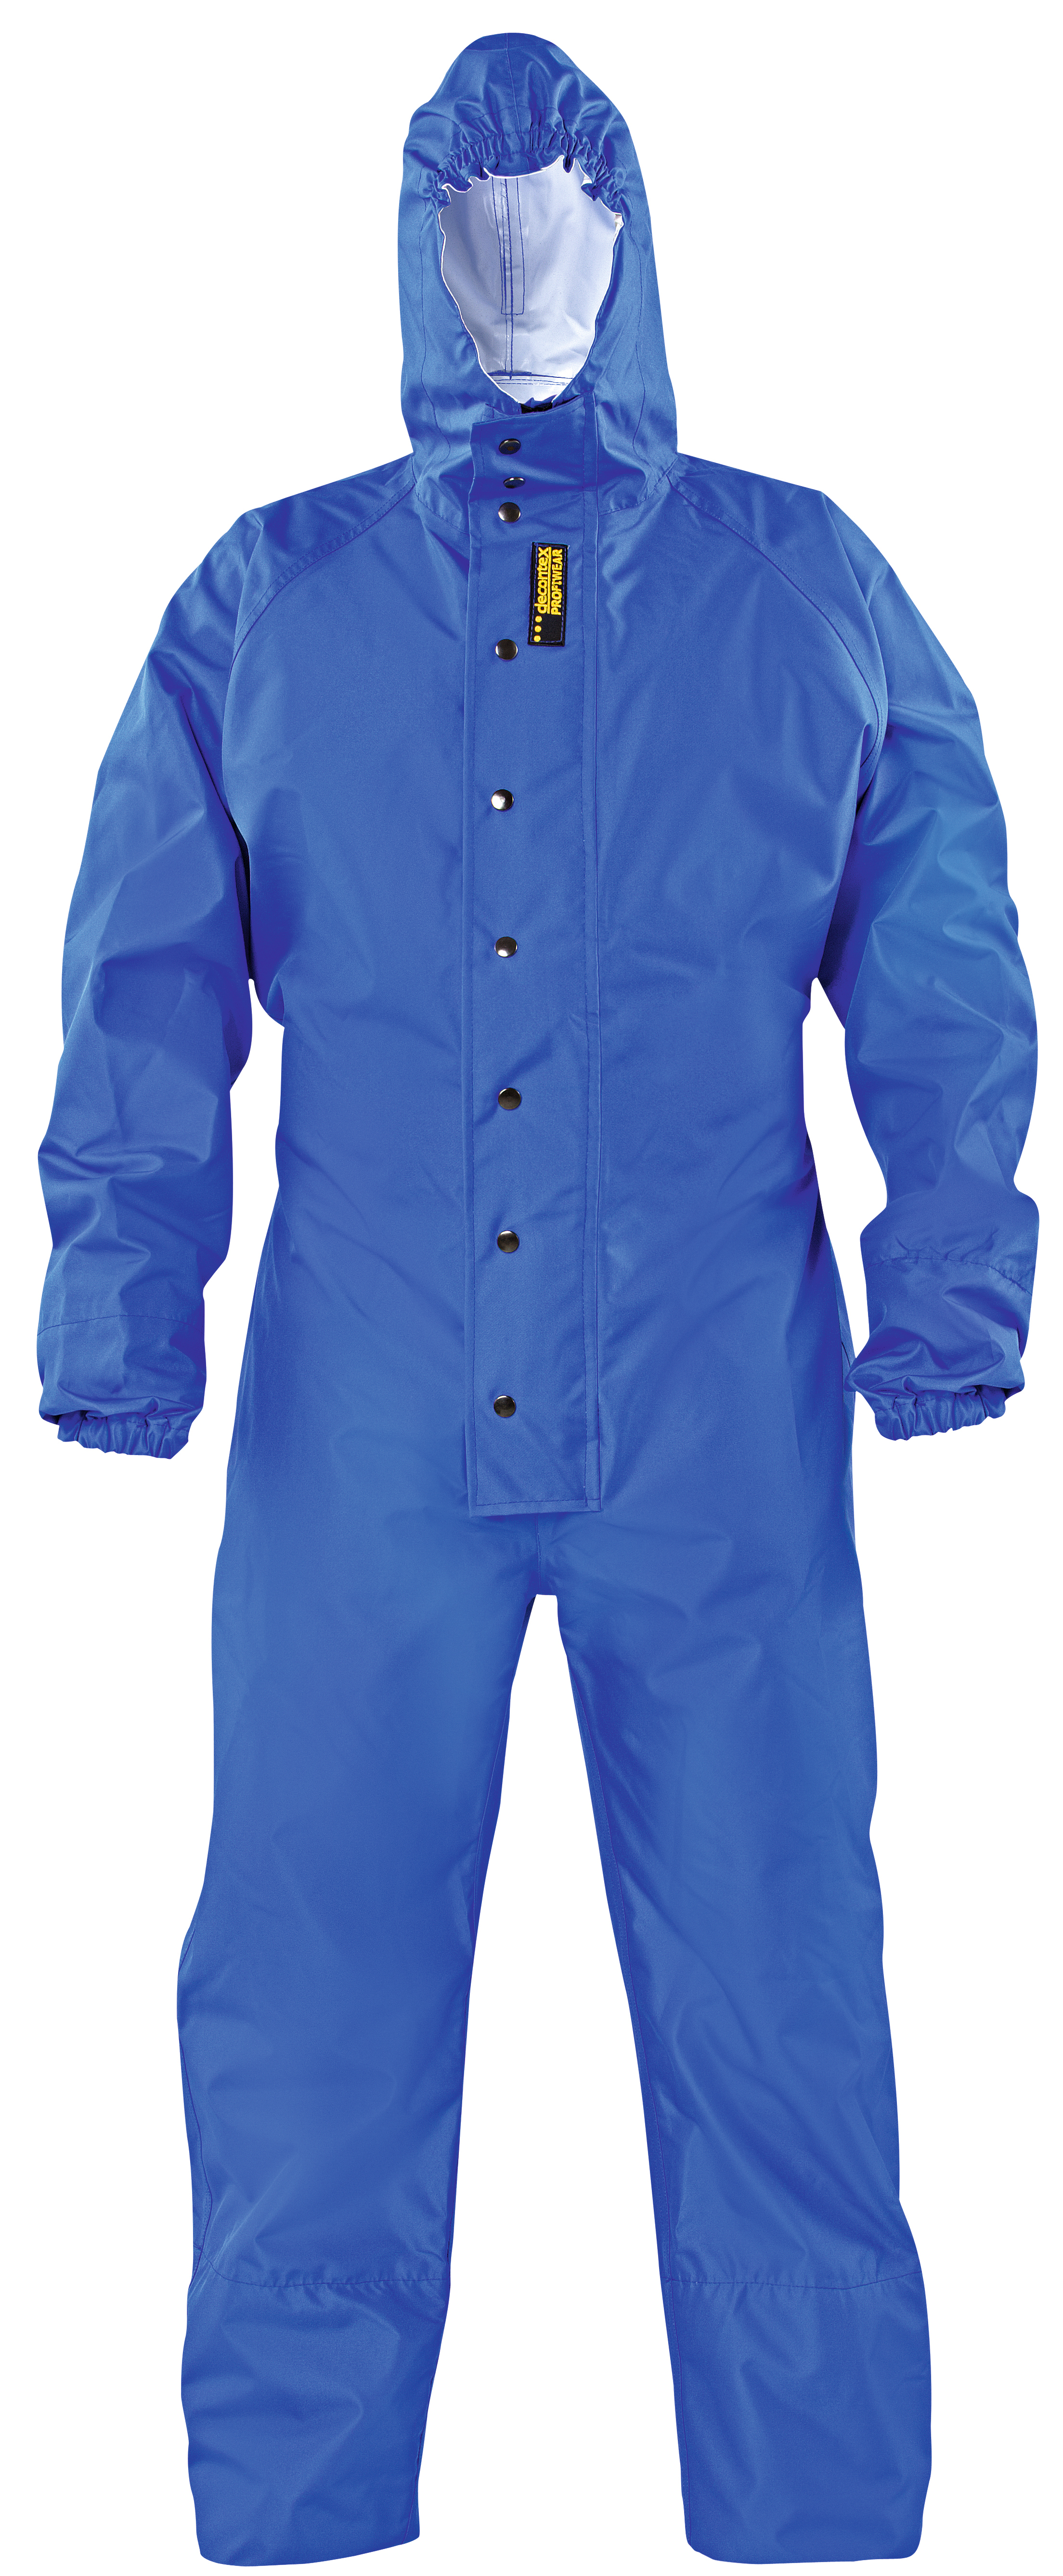 KIND-Regenschutz, Decontex-Schutzkleidung, C2000, Regen-Nässe-Schutz-Overall, blau